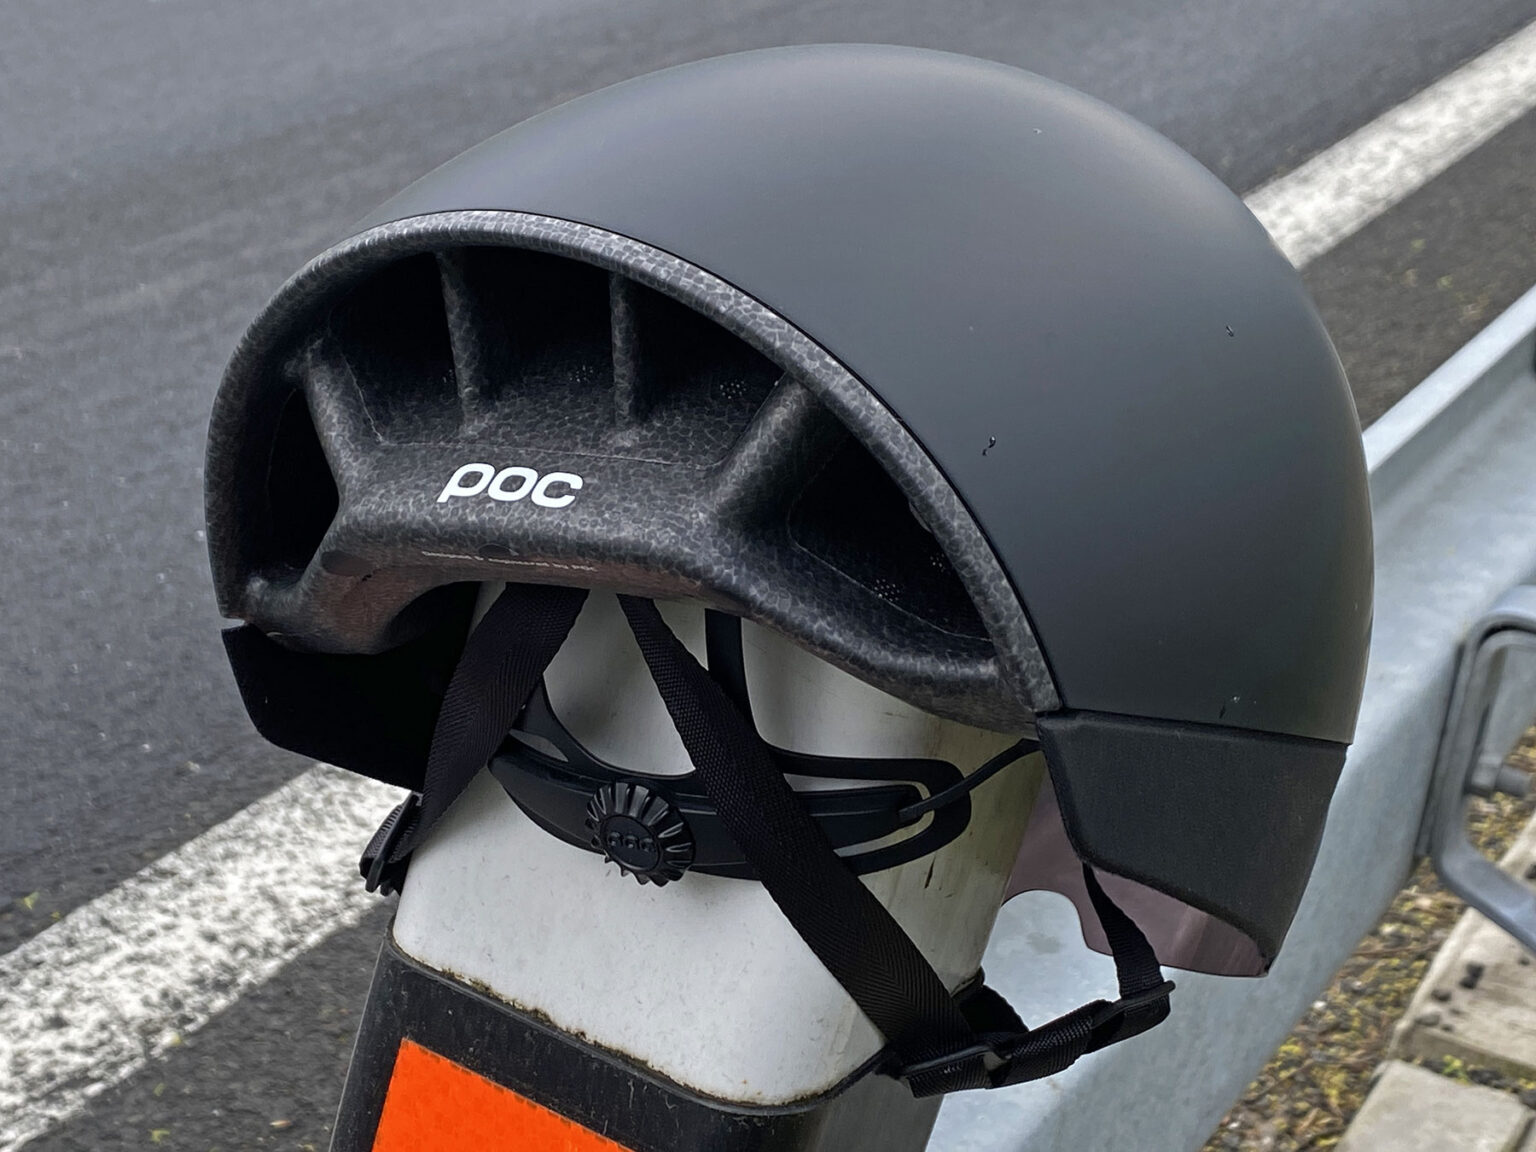 POC-Procen-Air-mini-aero-road-race-helmet-inspired-by-TT-aerodynamics_rear-opening-detail-1536x1152.jpg